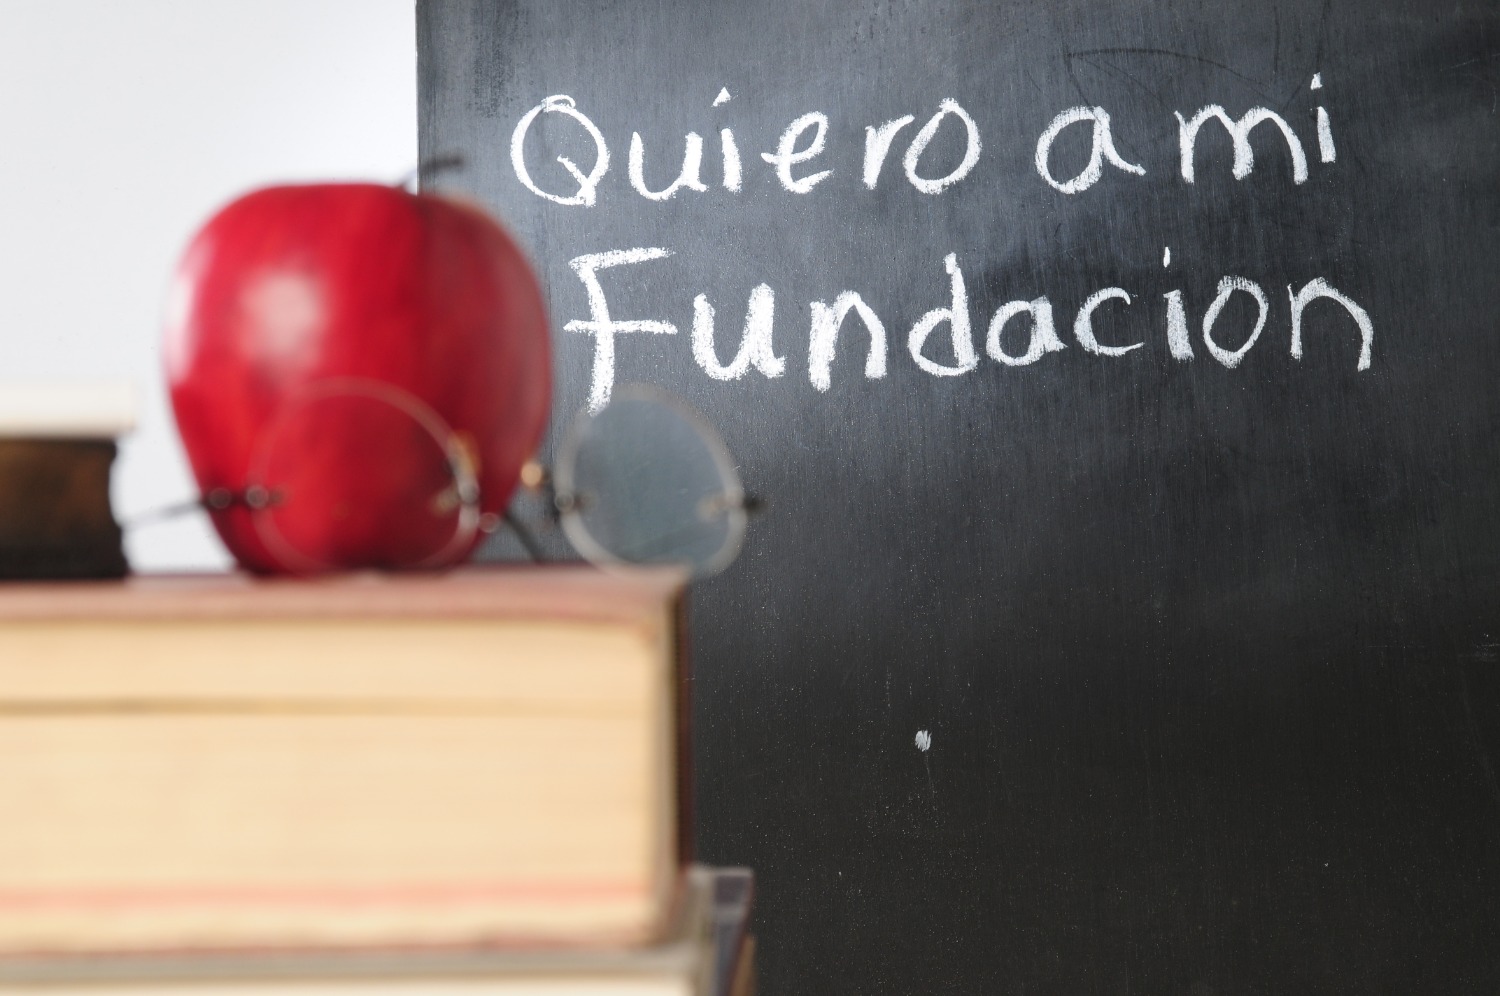 Spanish on blackboard with an apple